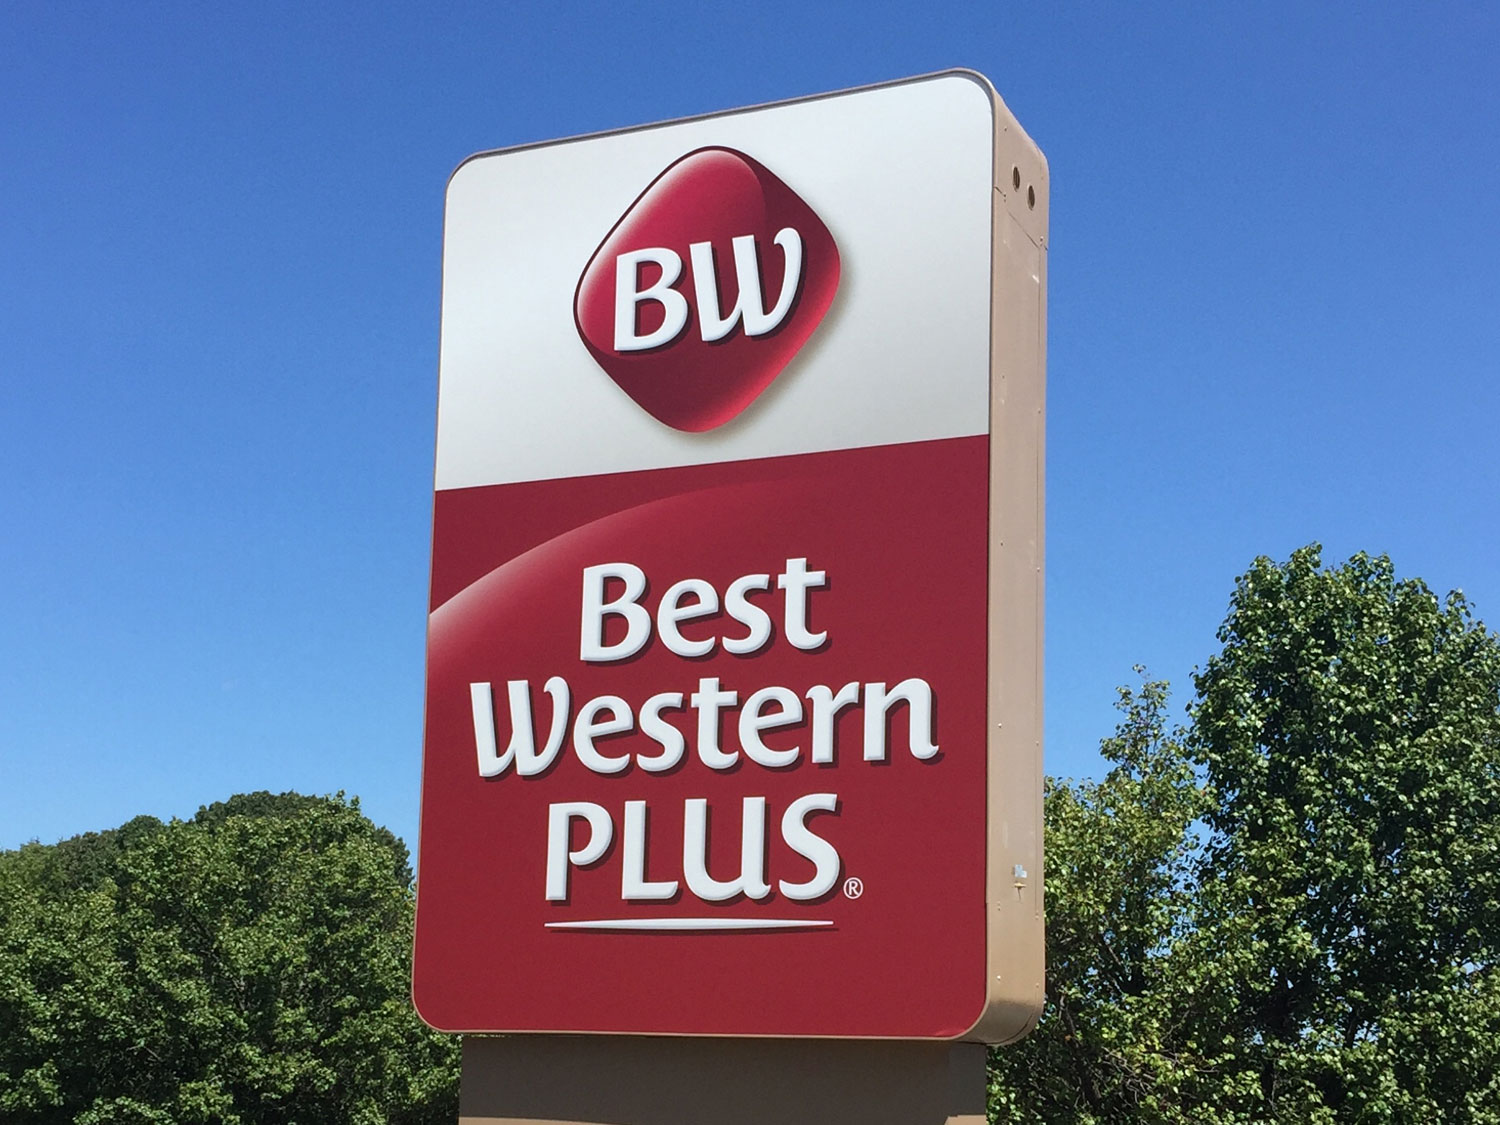 Best Western Plus Signage